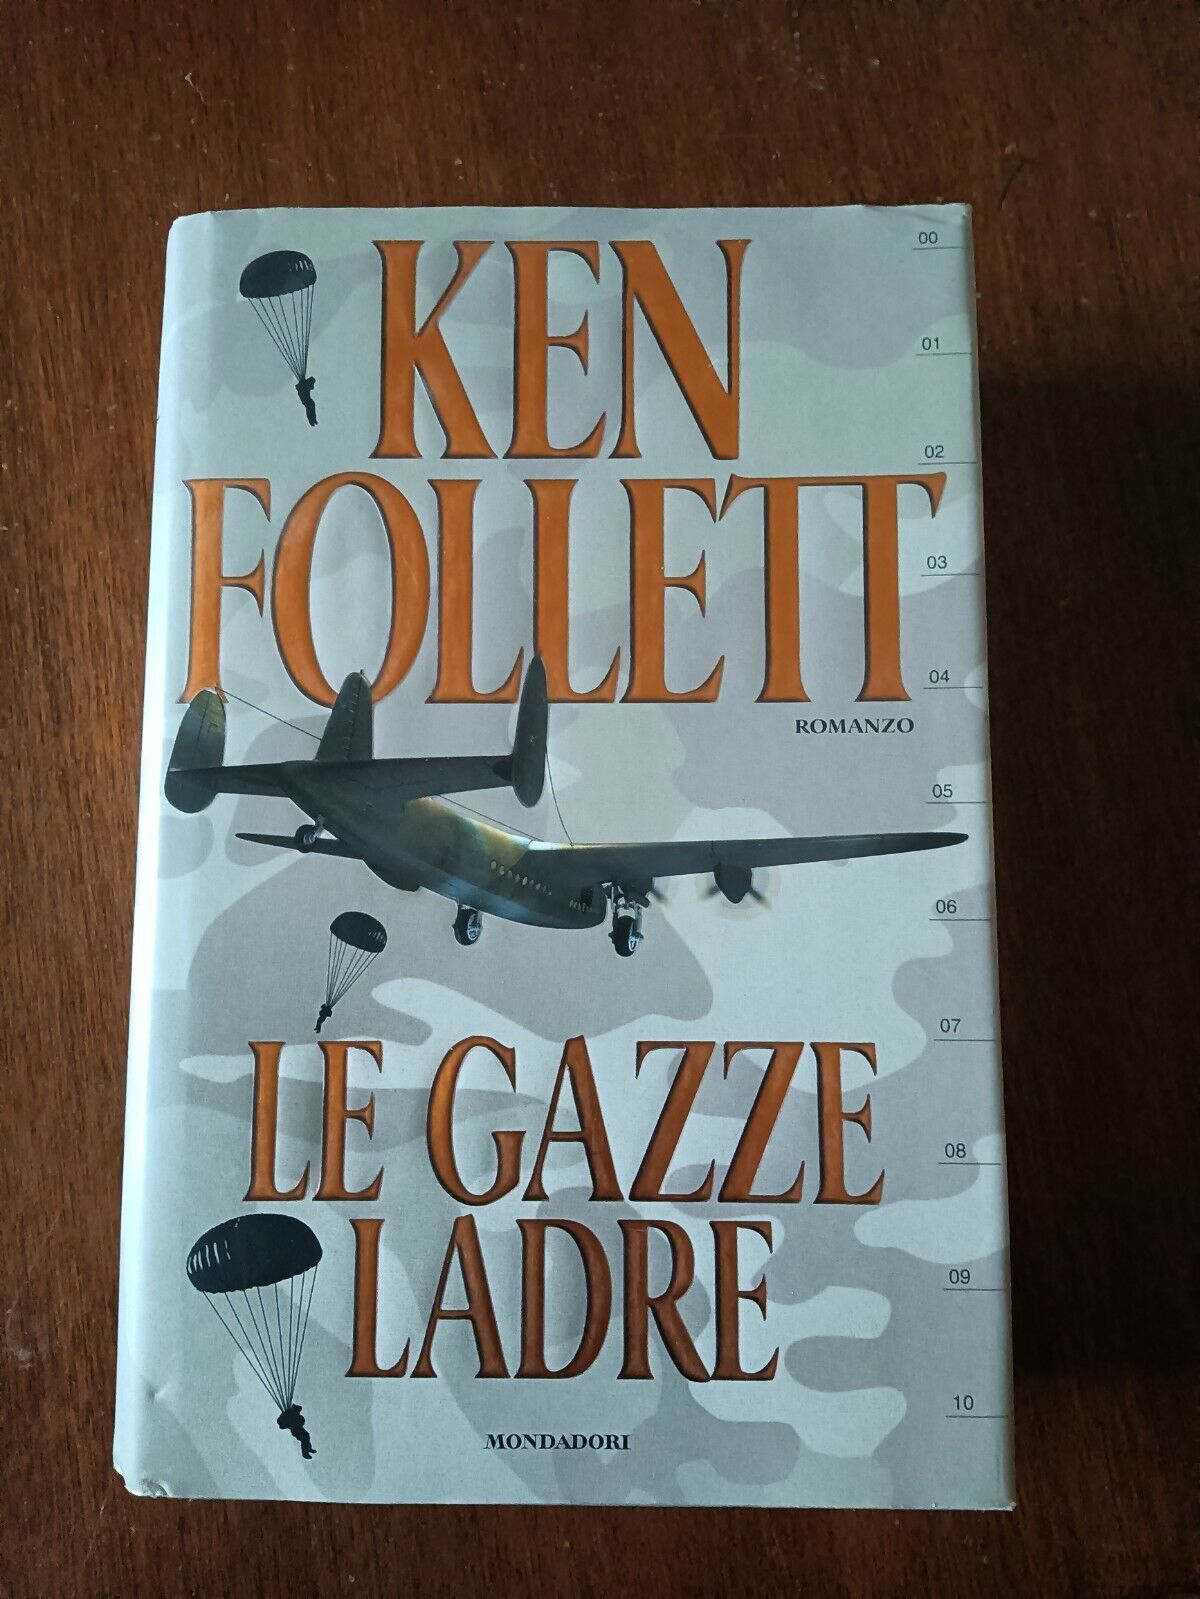 Le gazze ladre | Ken Follett - Mondadori